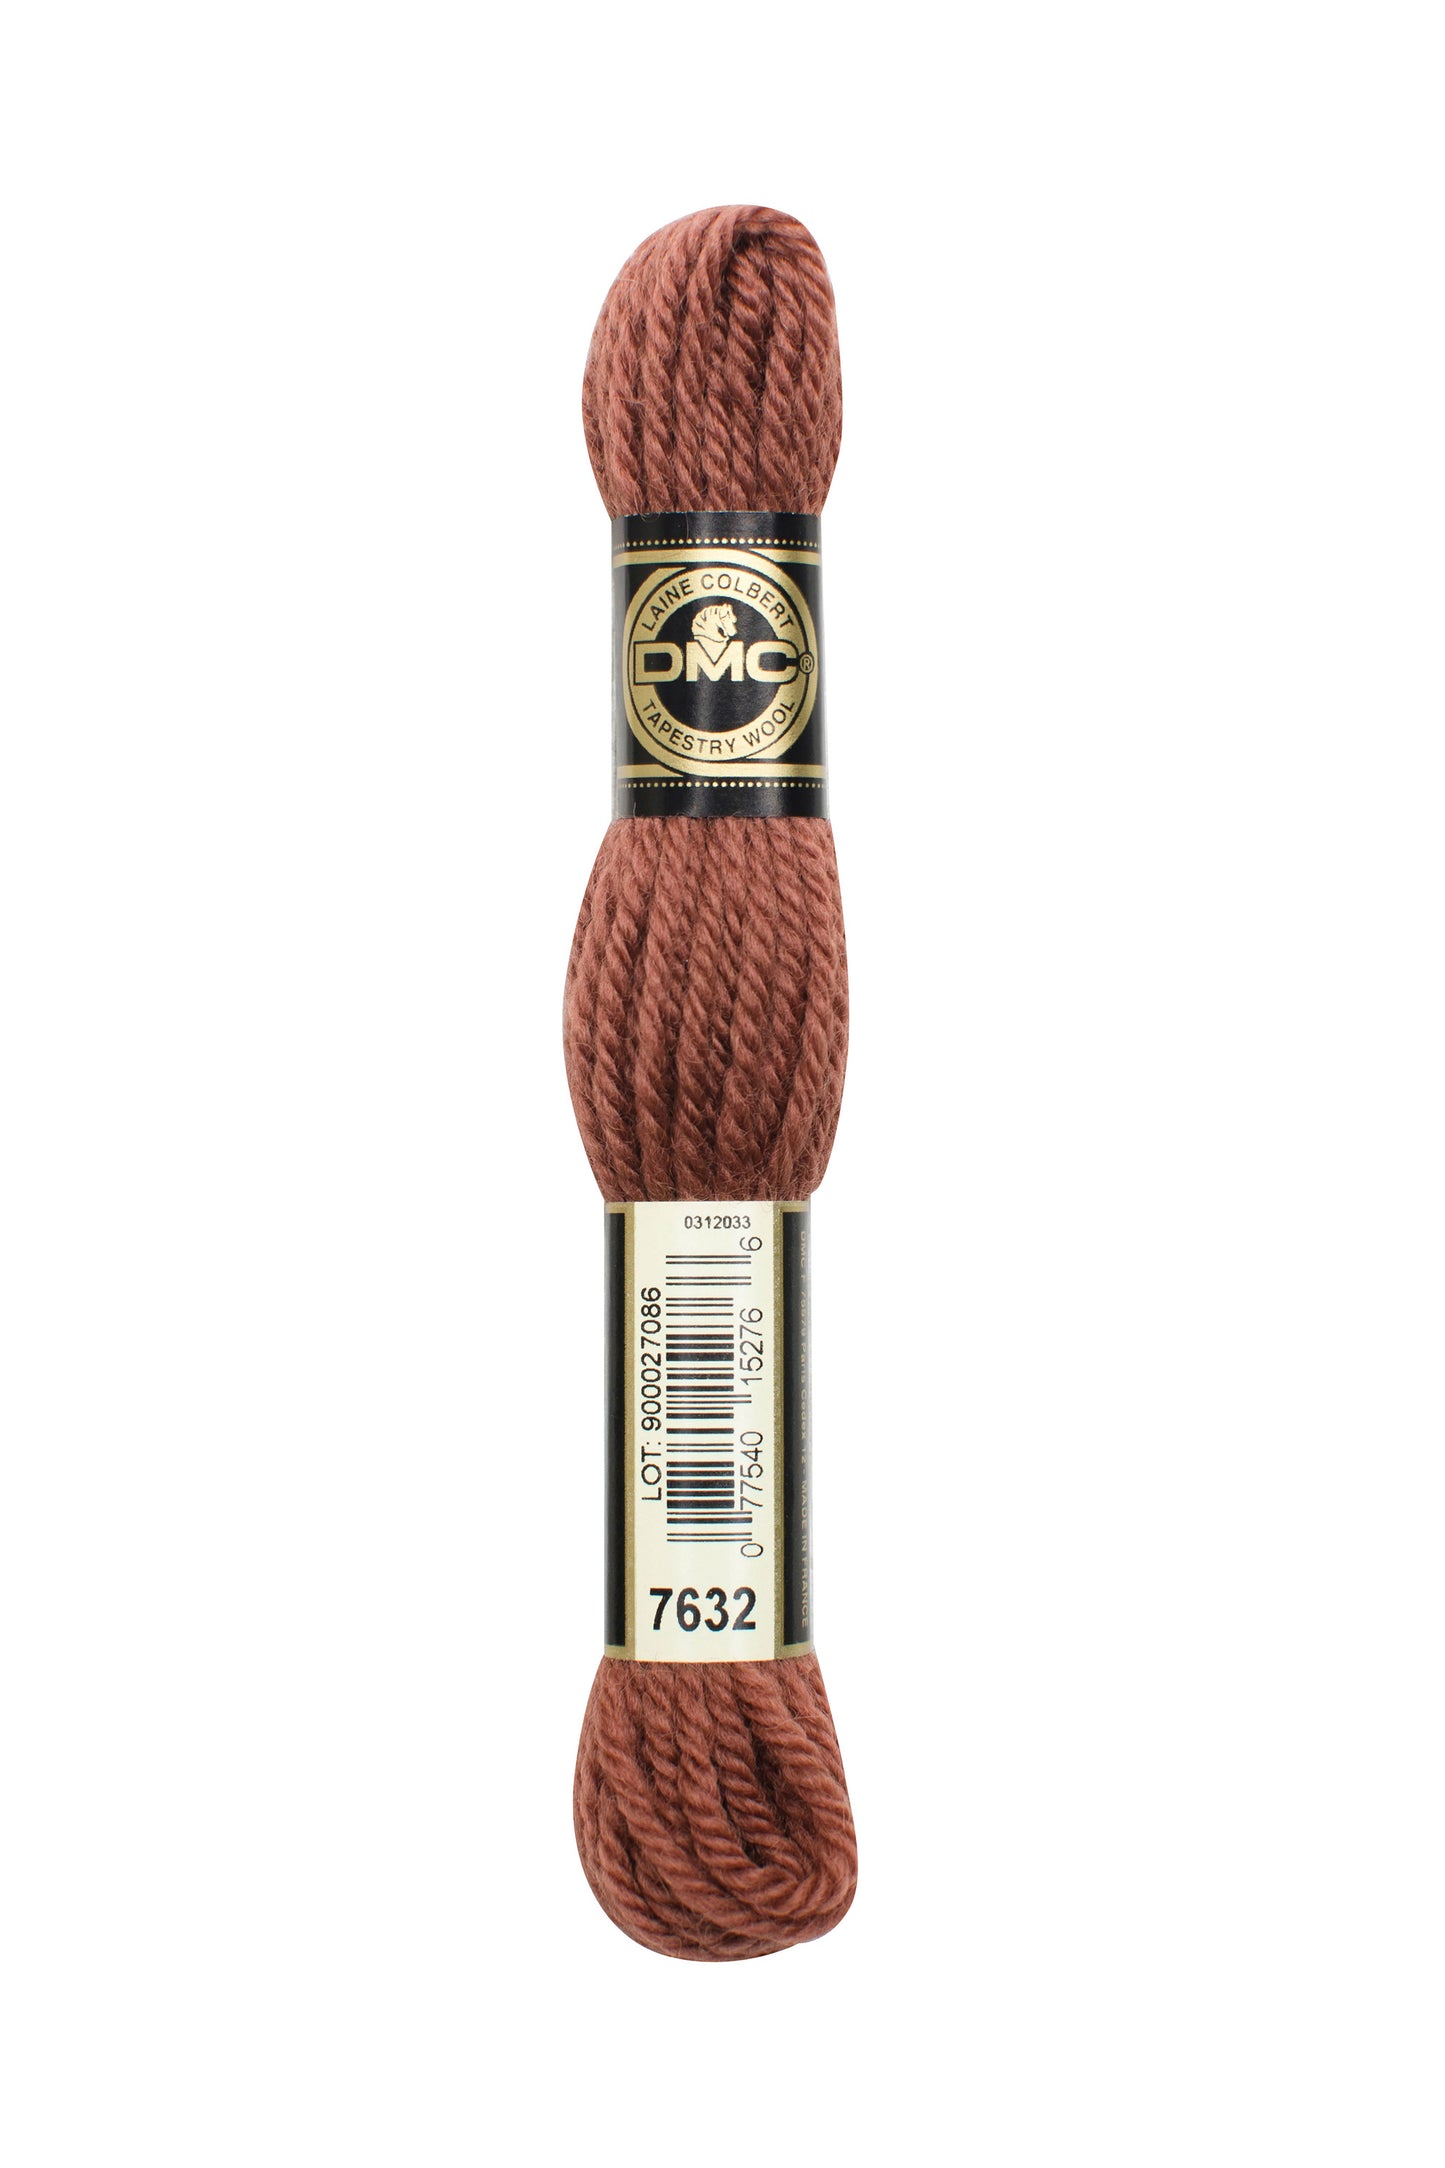 7632 – DMC Tapestry Wool